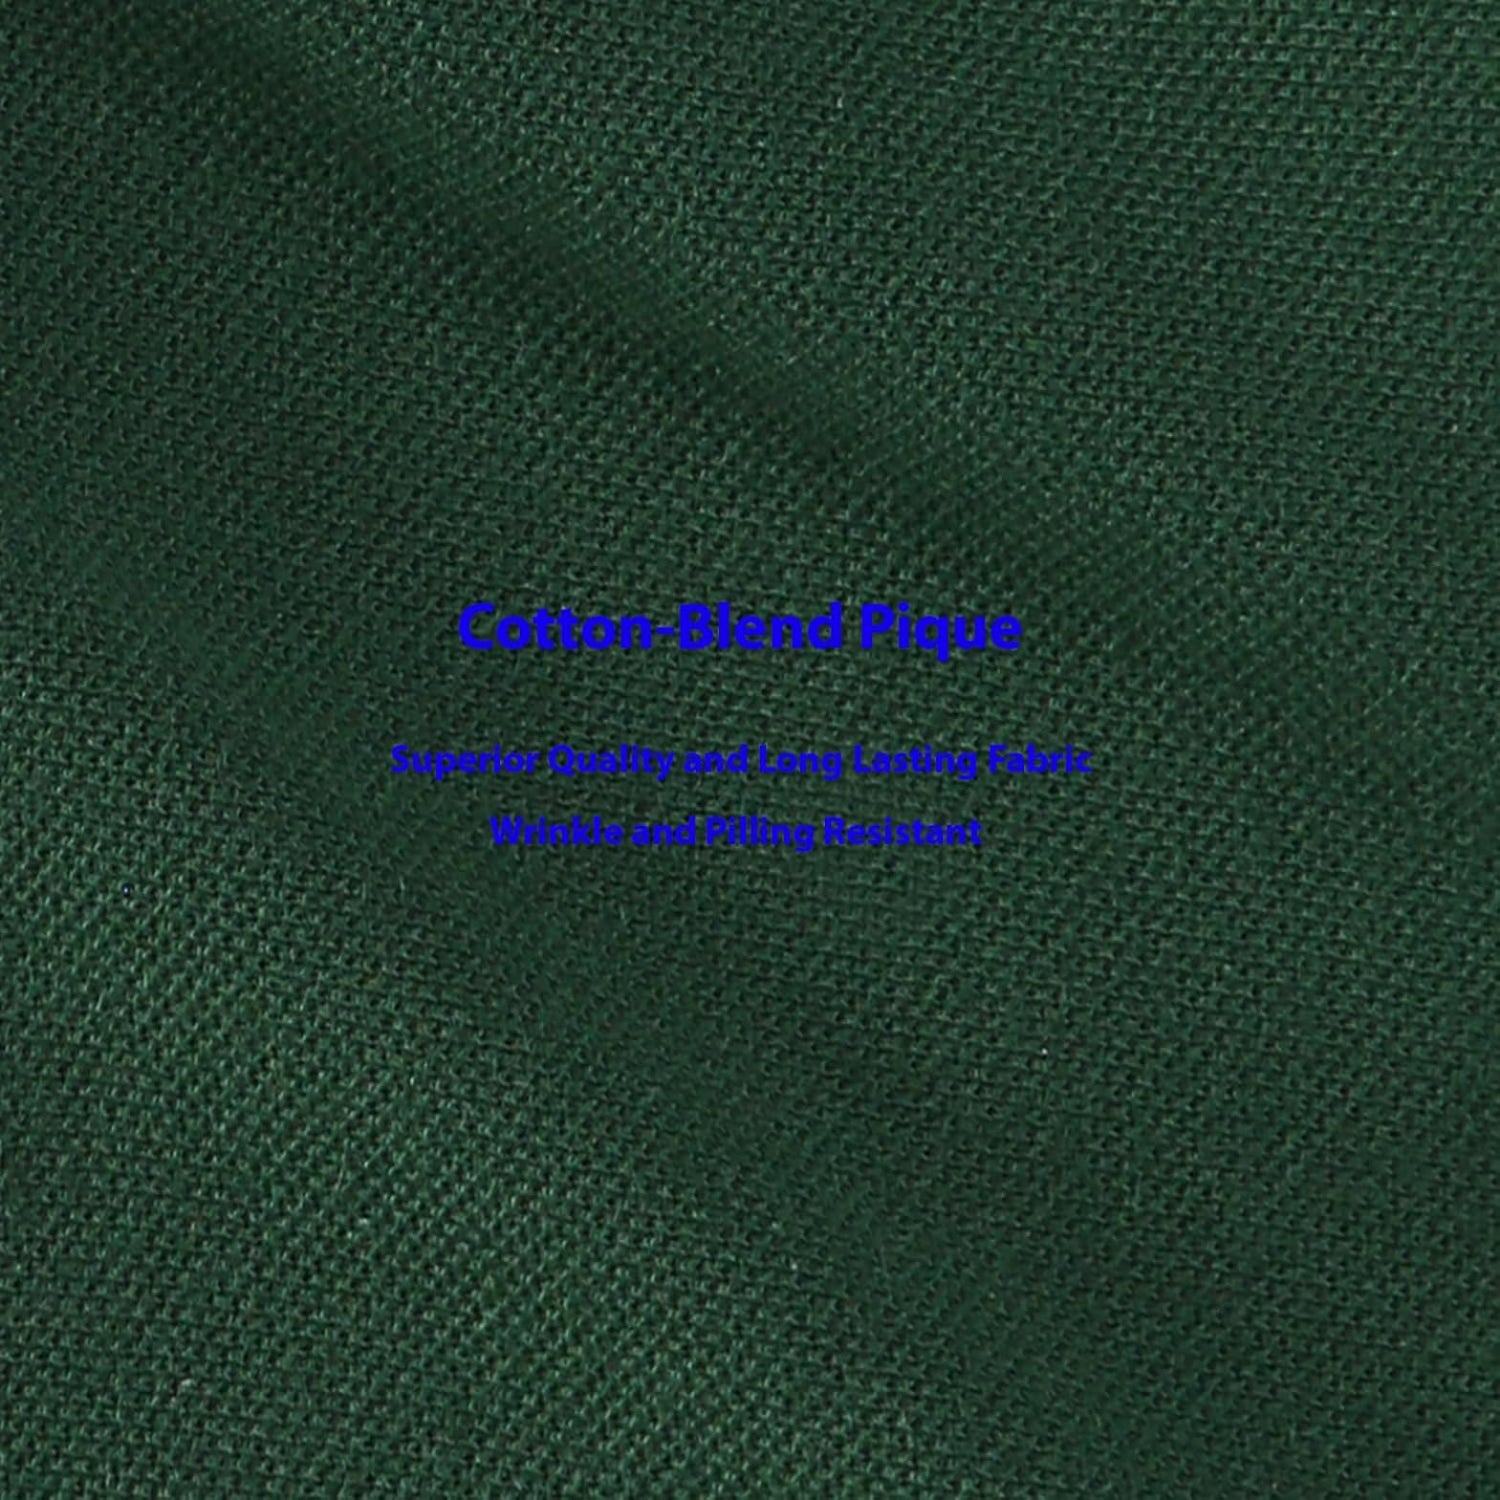 Educated Uniforms Boys 4-20 Short Sleeve Pique Polo Shirt, 3-Pack